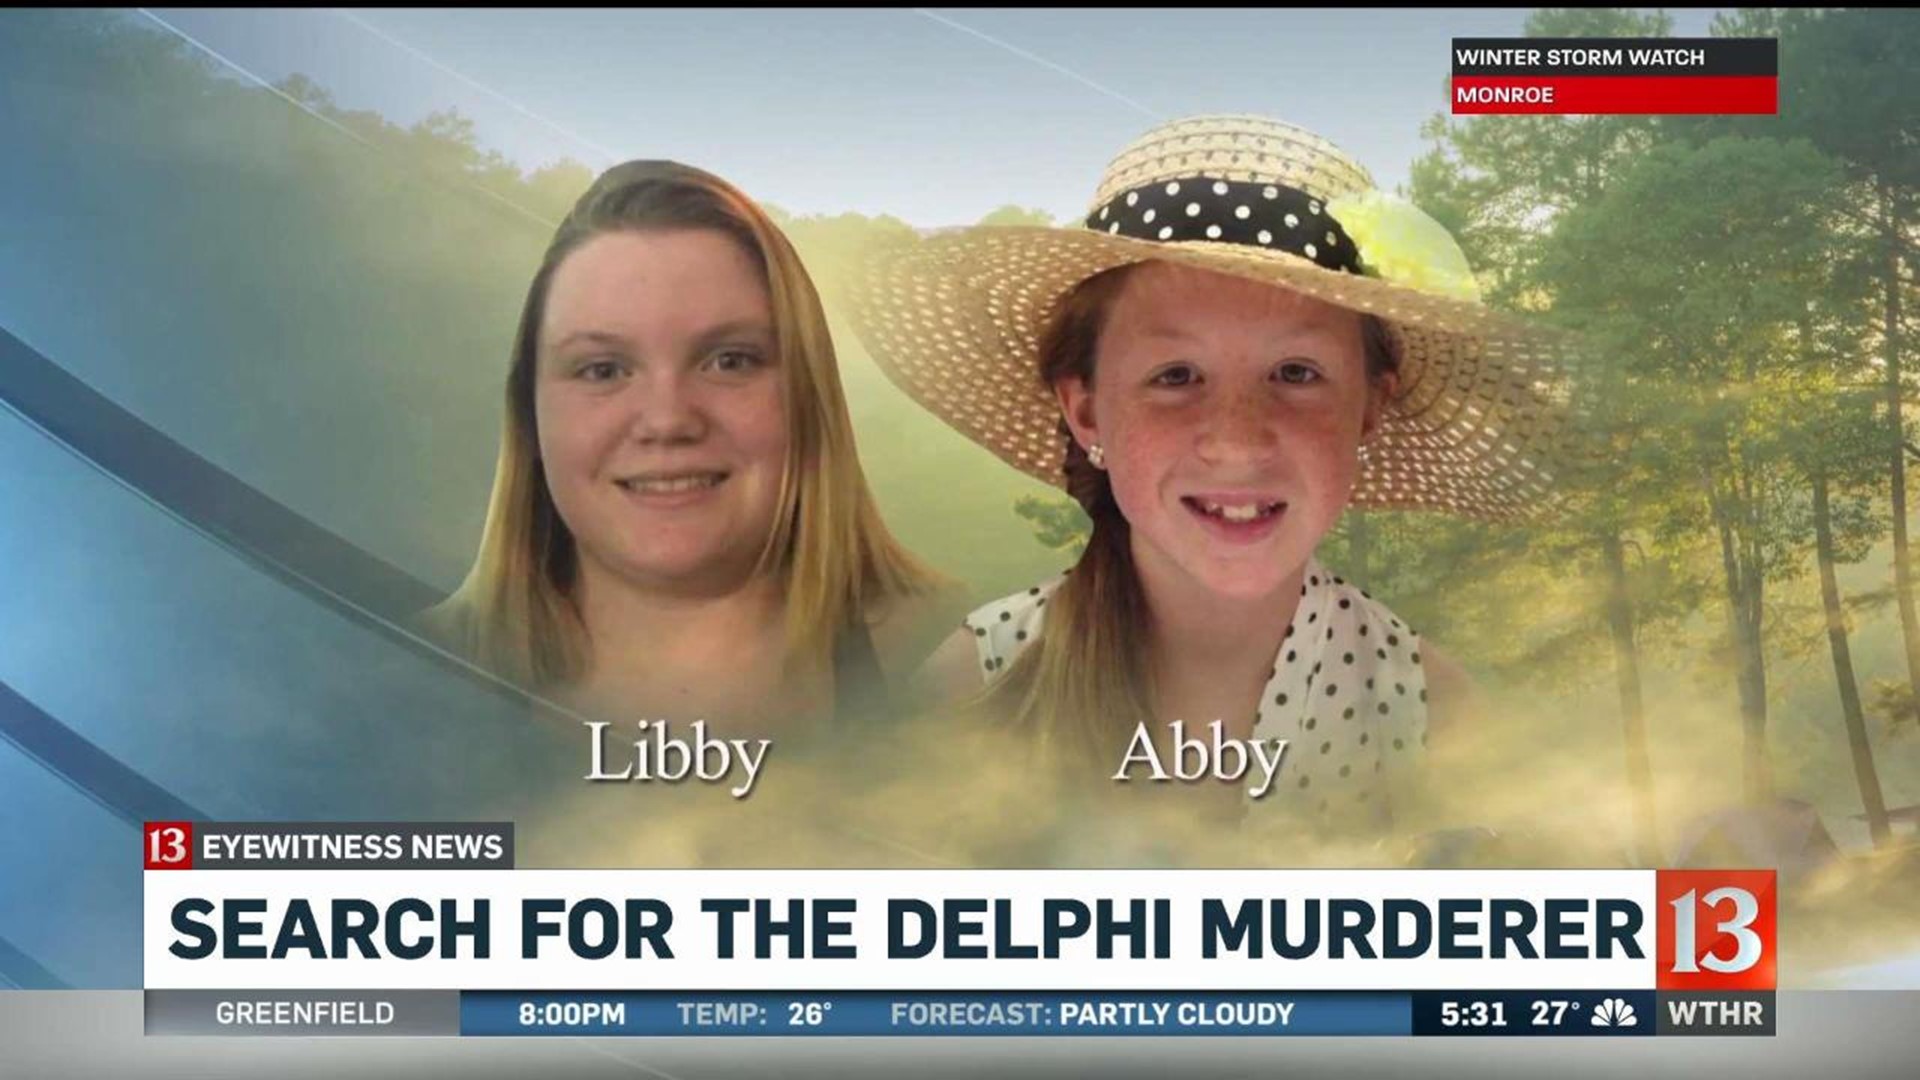 Search for Delphi murderer